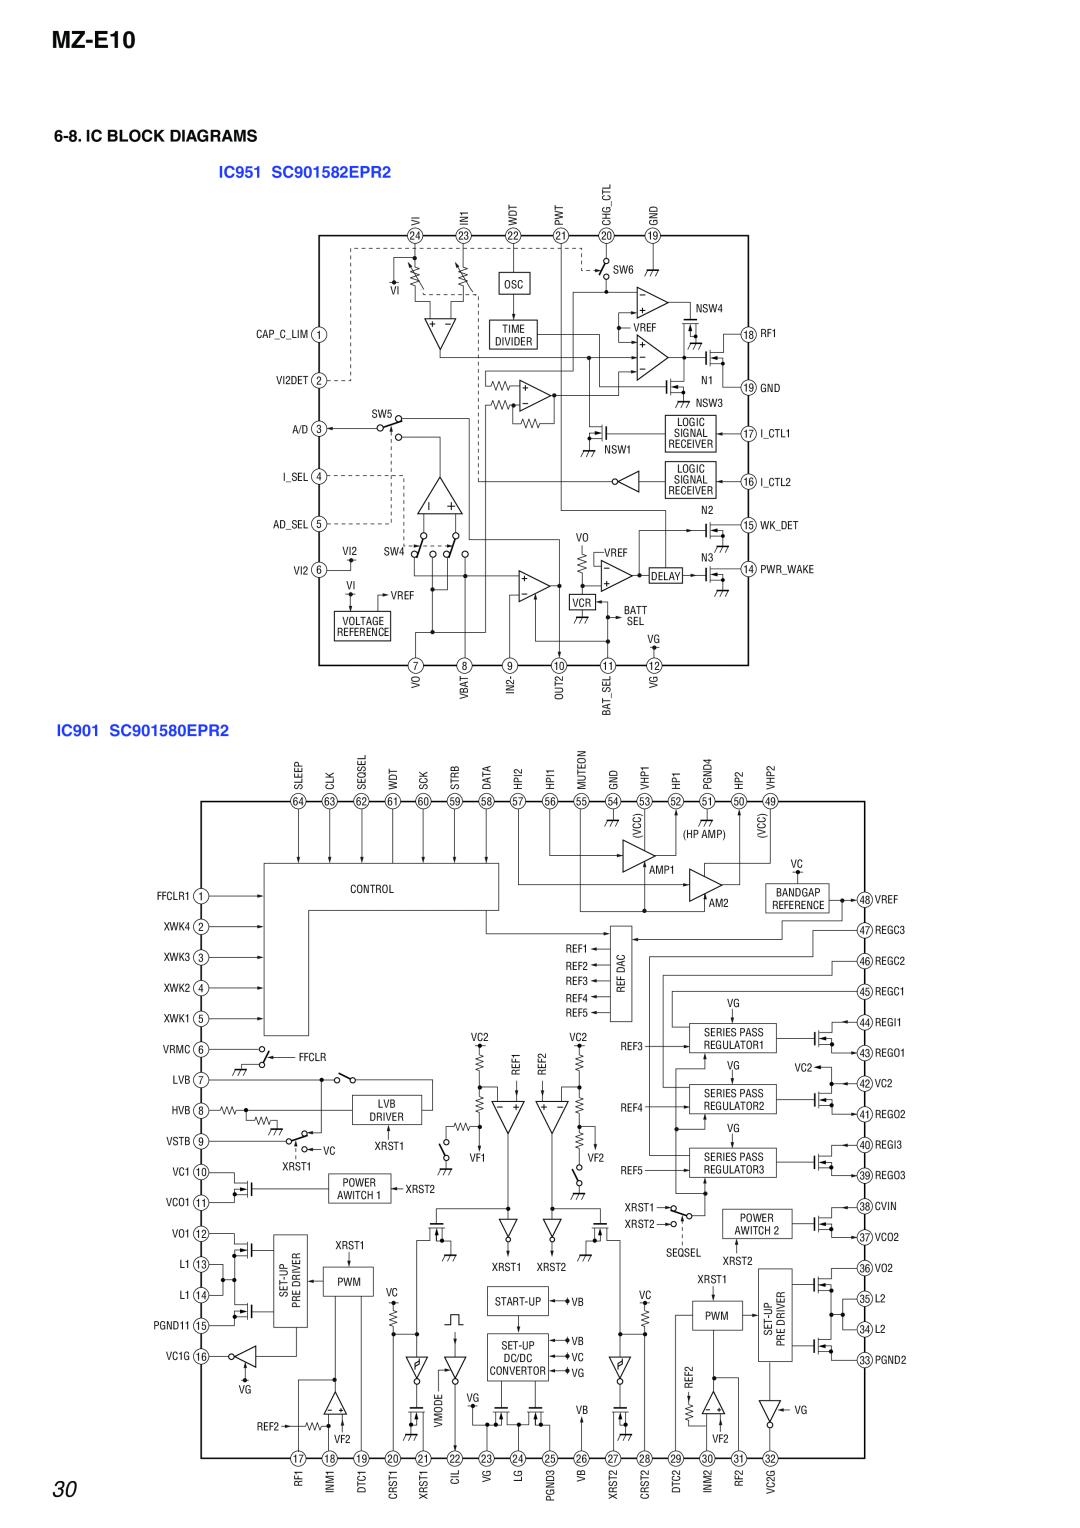 Sony MZ-E10 service manual Ic Block Diagrams, IC951 SC901582EPR2, IC901 SC901580EPR2 